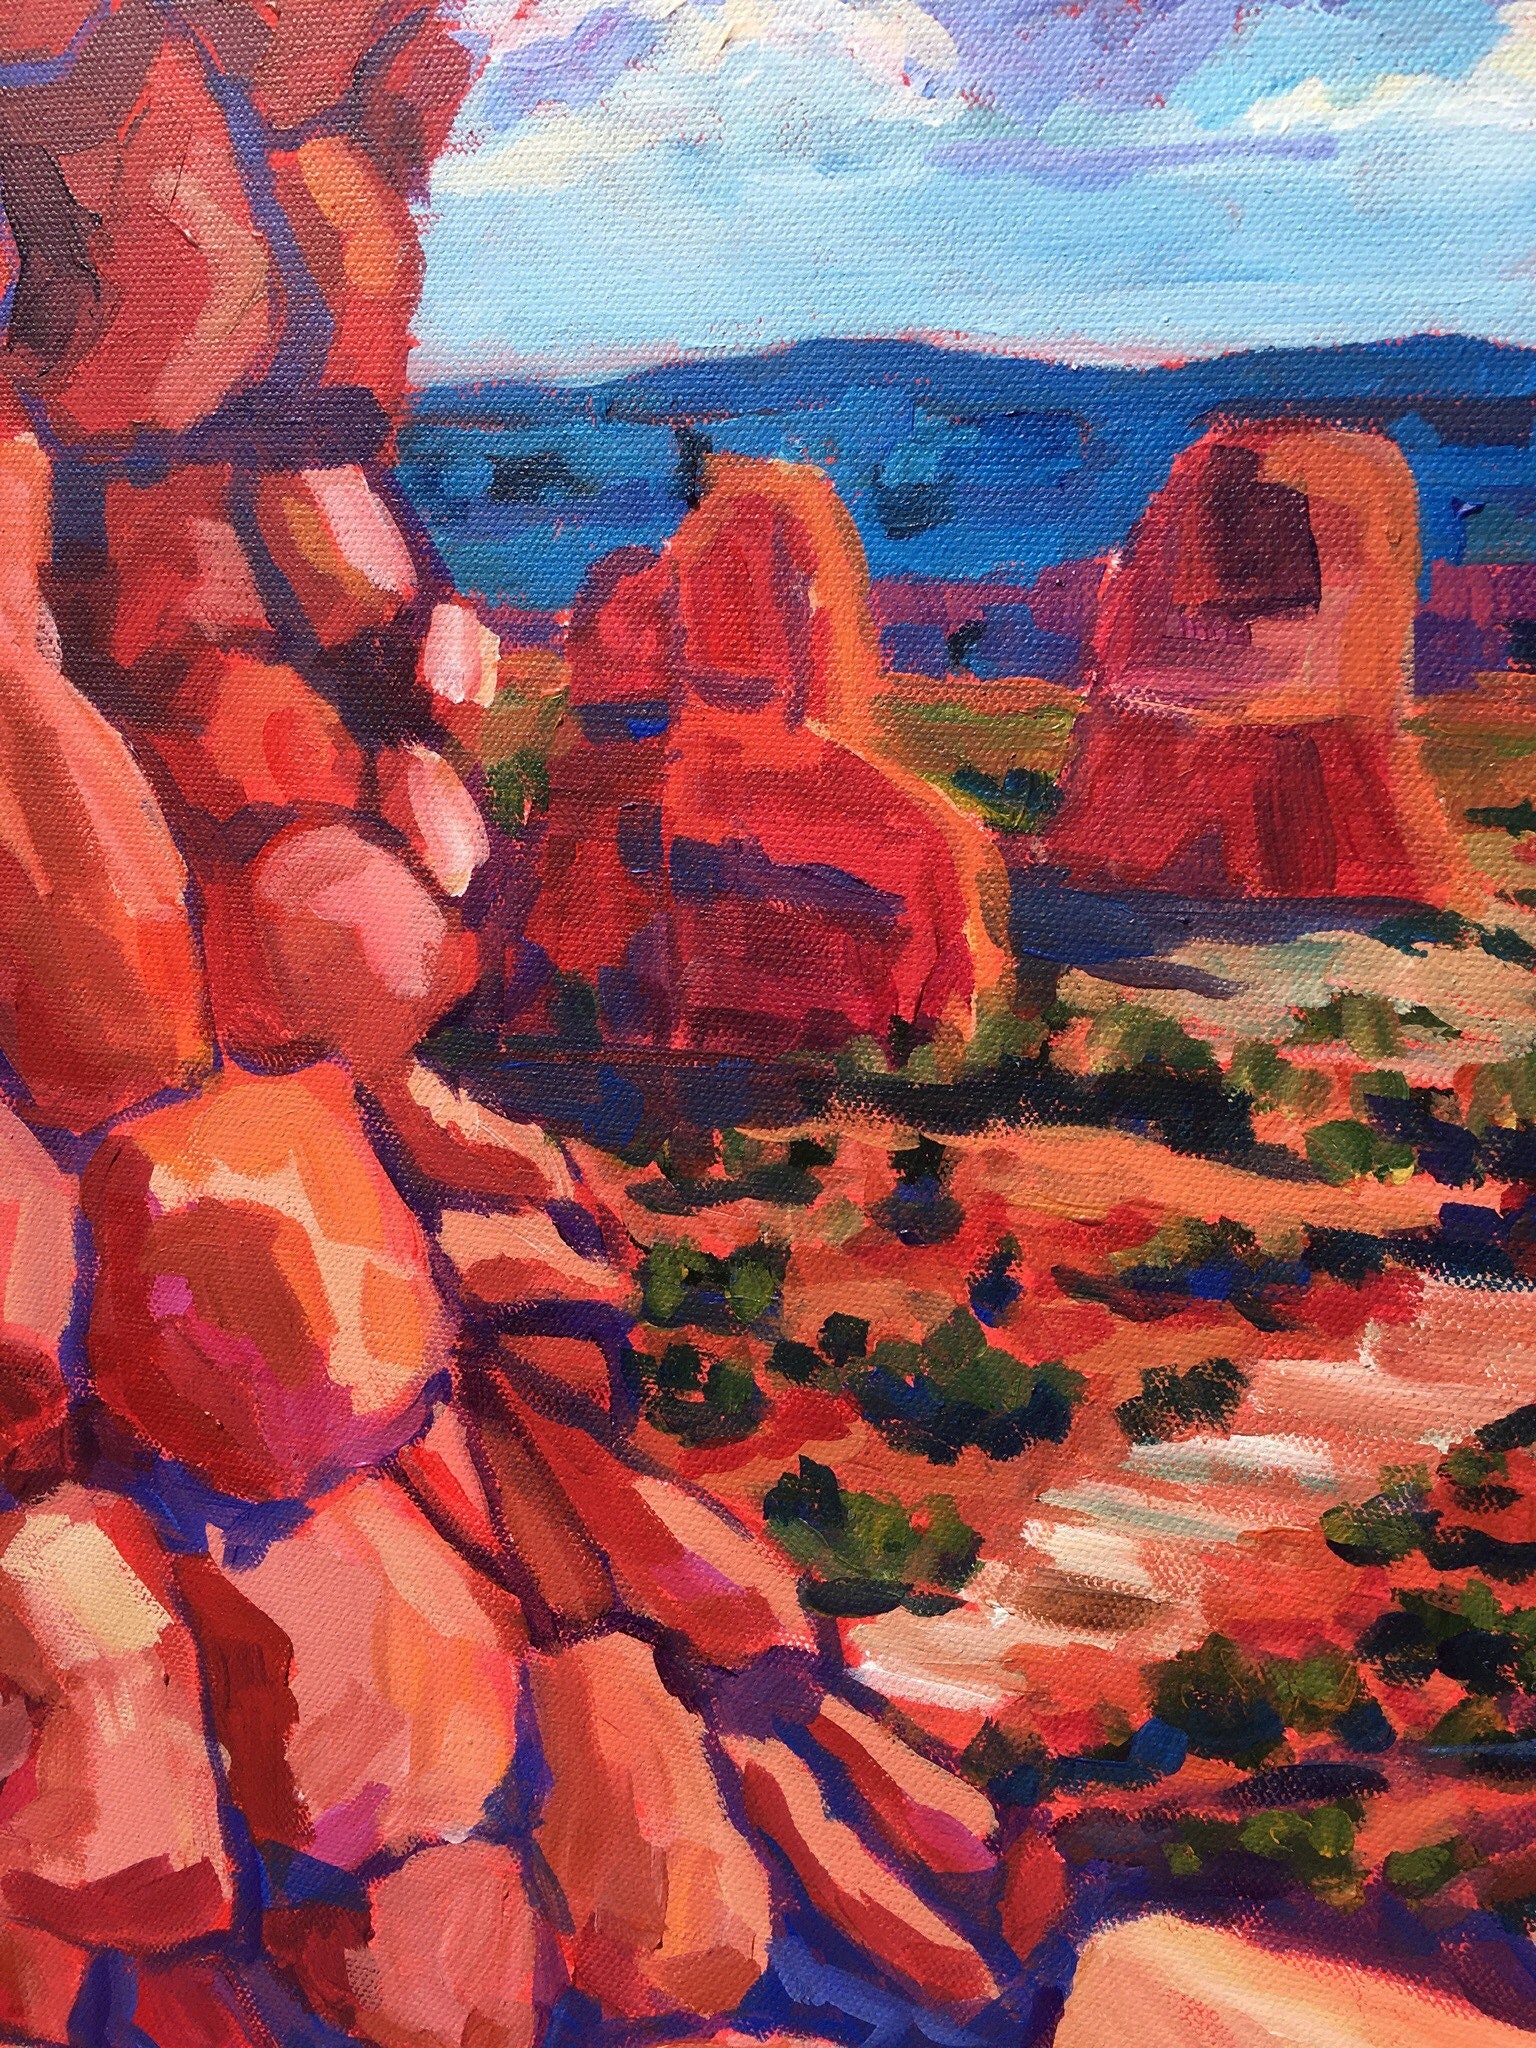 Detail of painting showing red rocks, Utah National Park